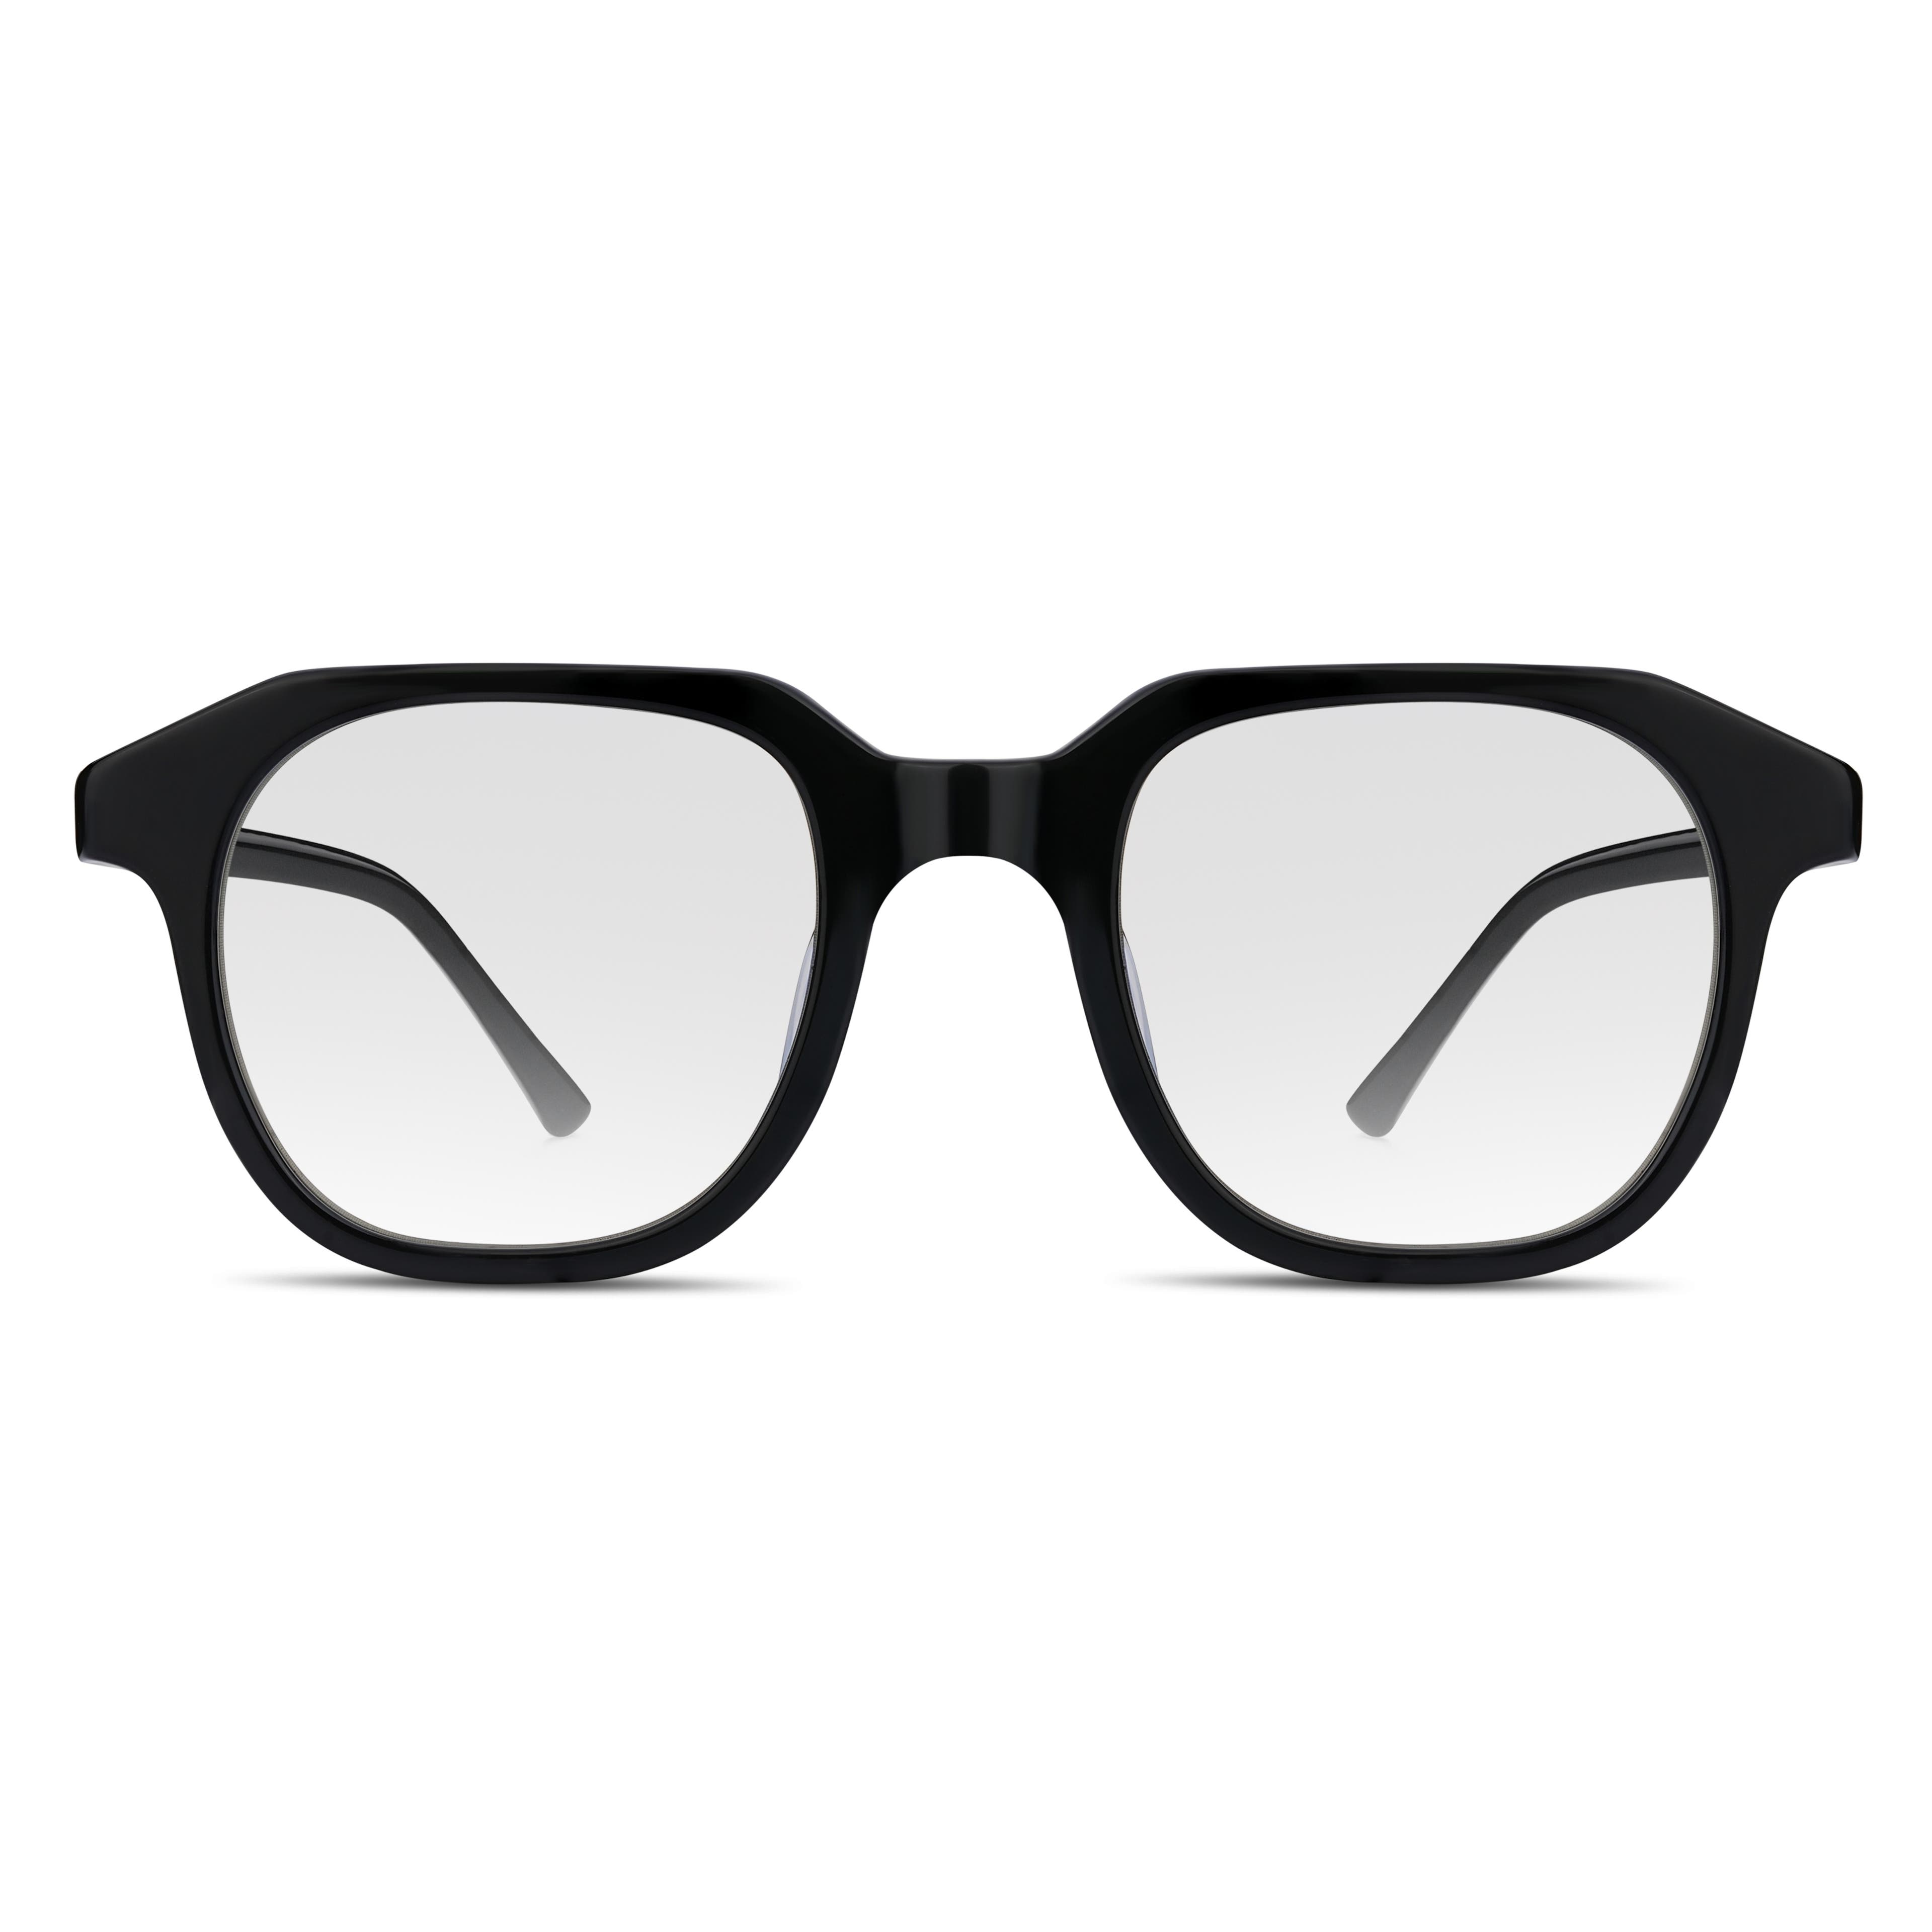 Clear lens glasses  21 Styles for men in stock